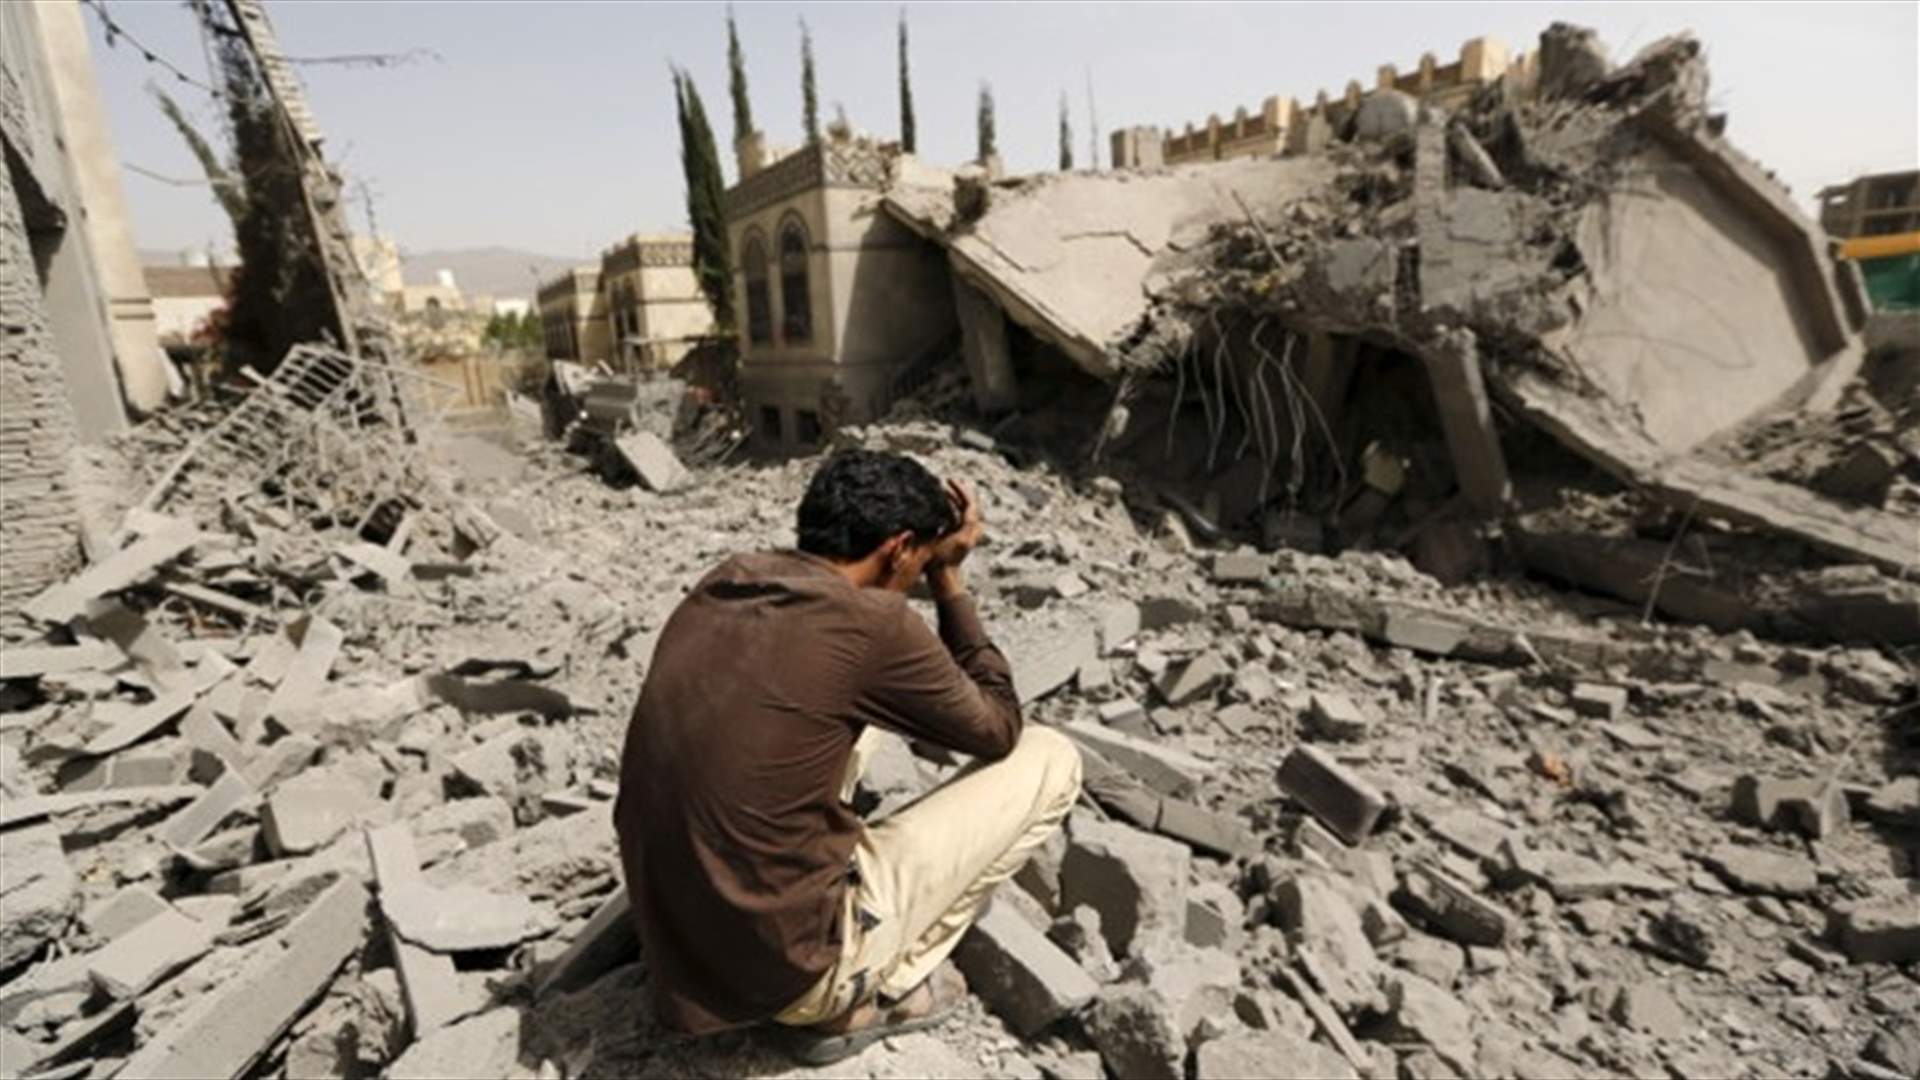 100 civilians killed a month in Yemen war, most by coalition - UN